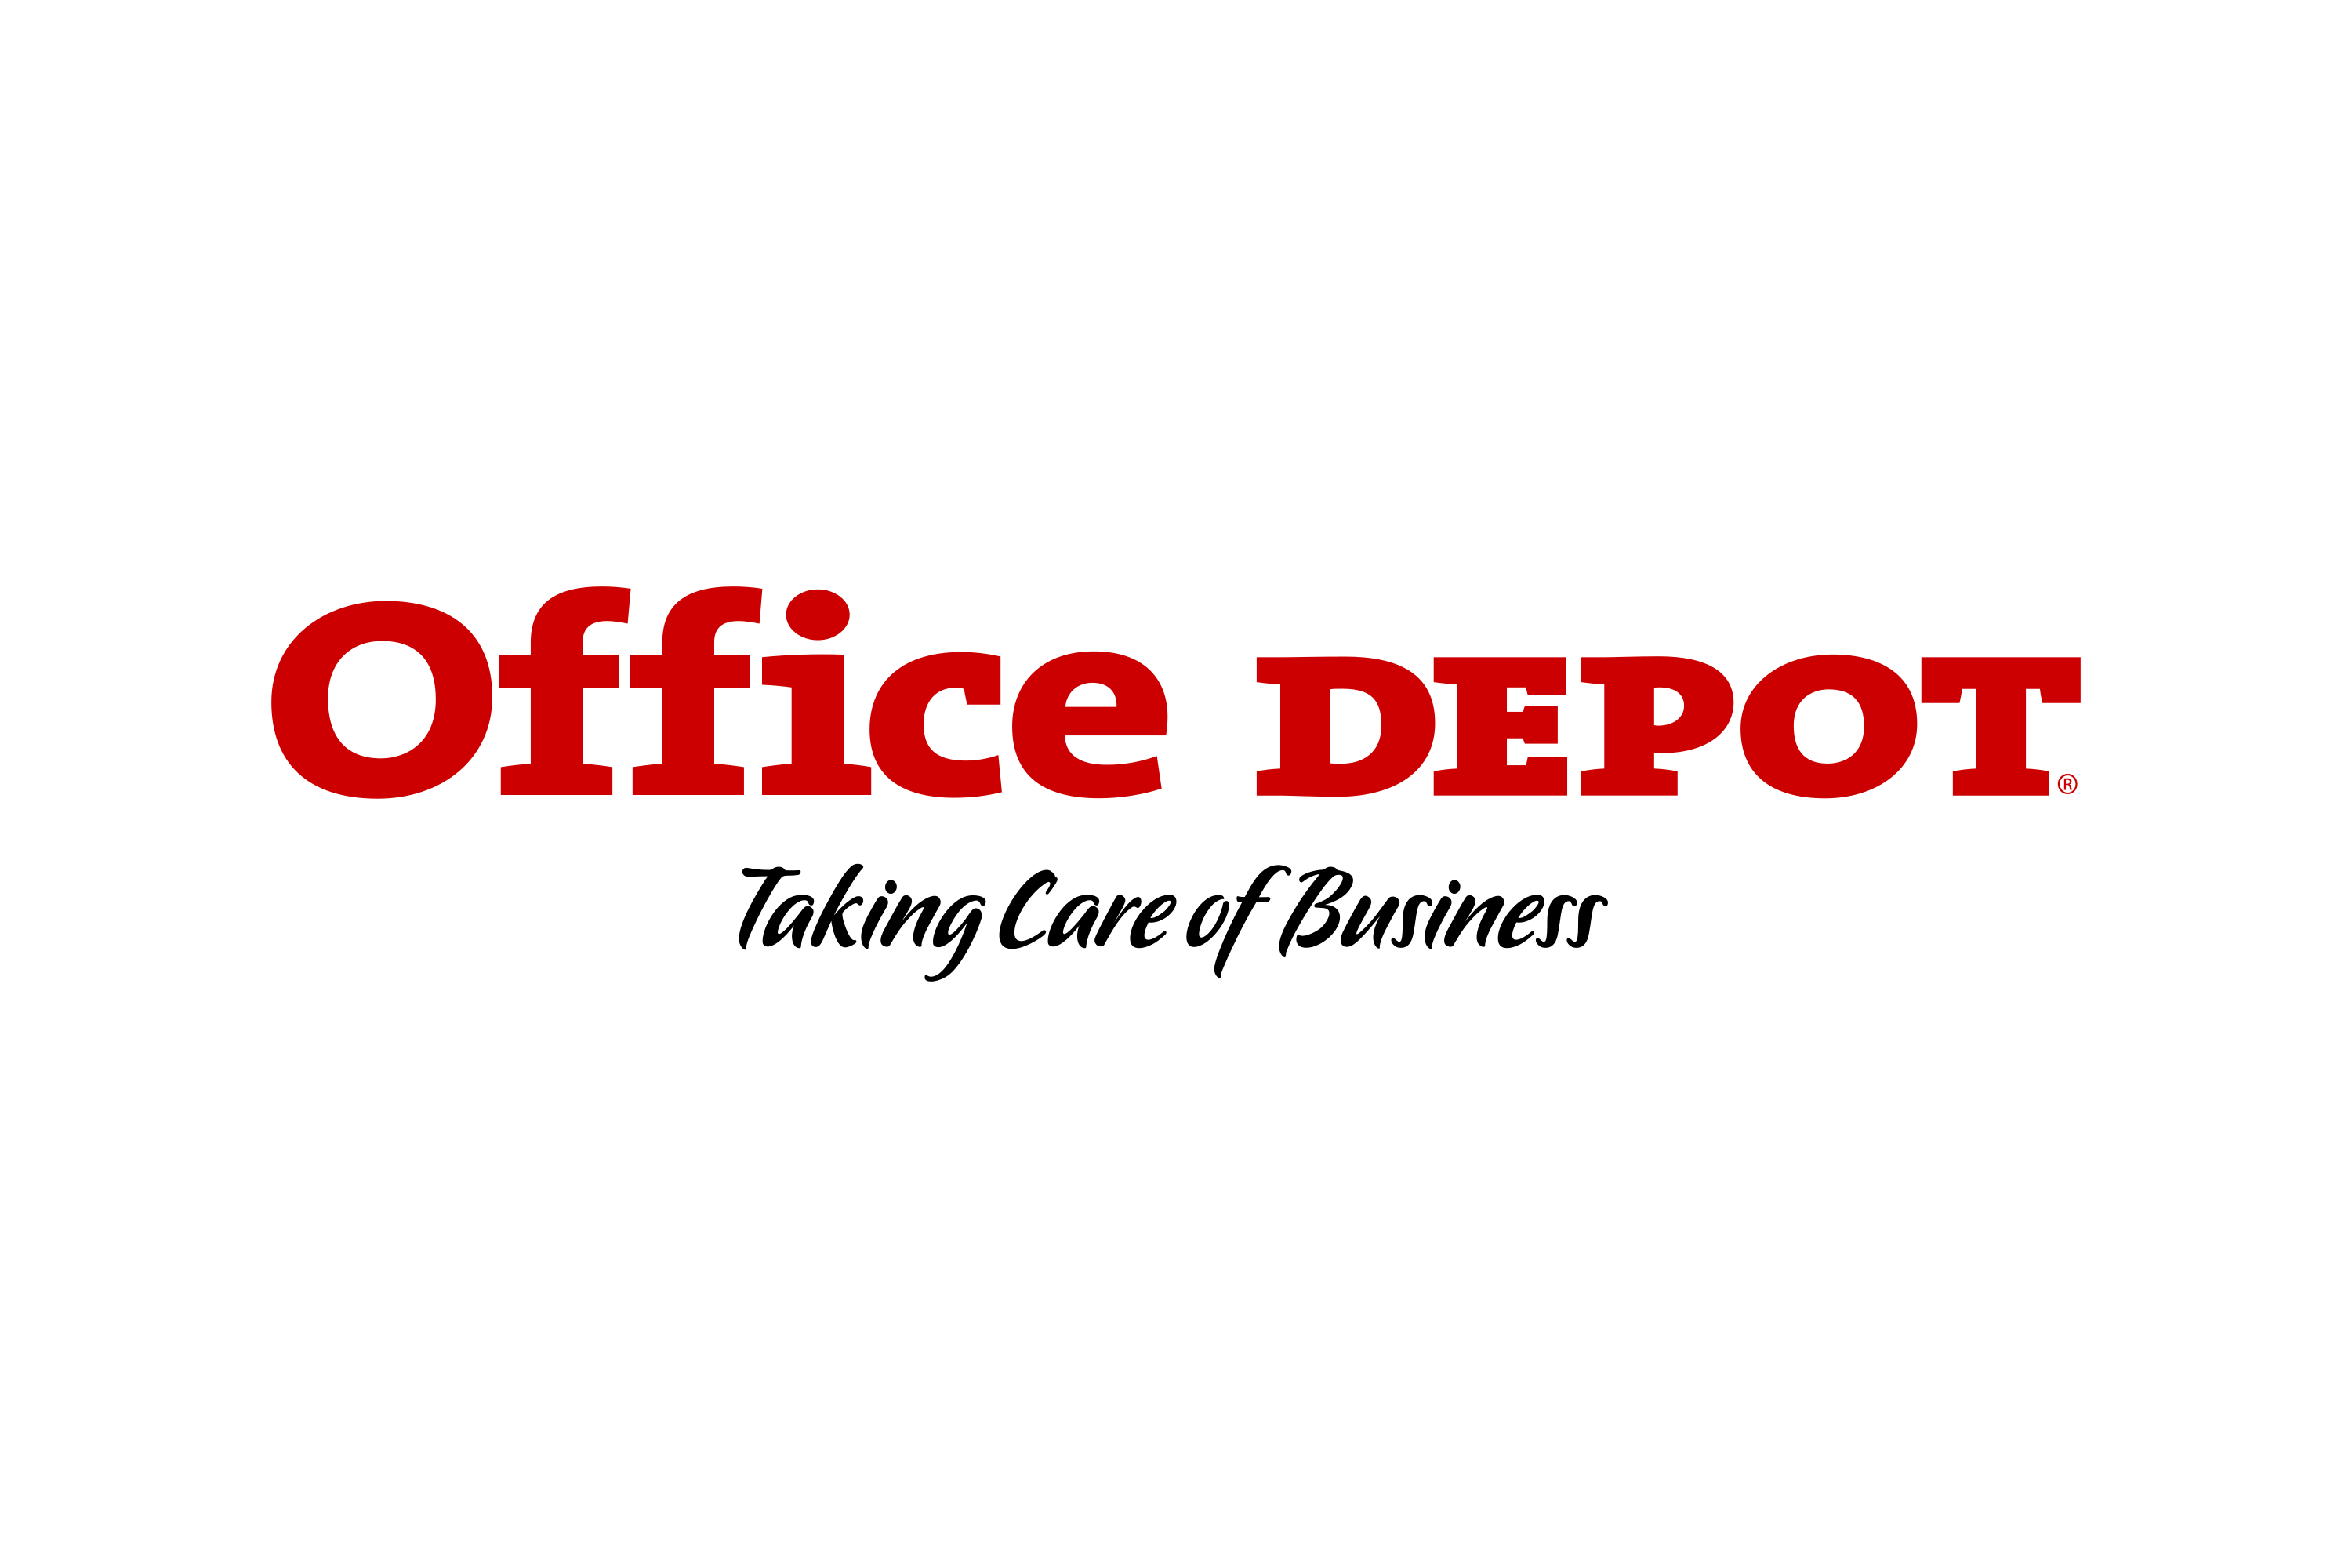 Download Office Depot Logo in SVG Vector or PNG File Format 